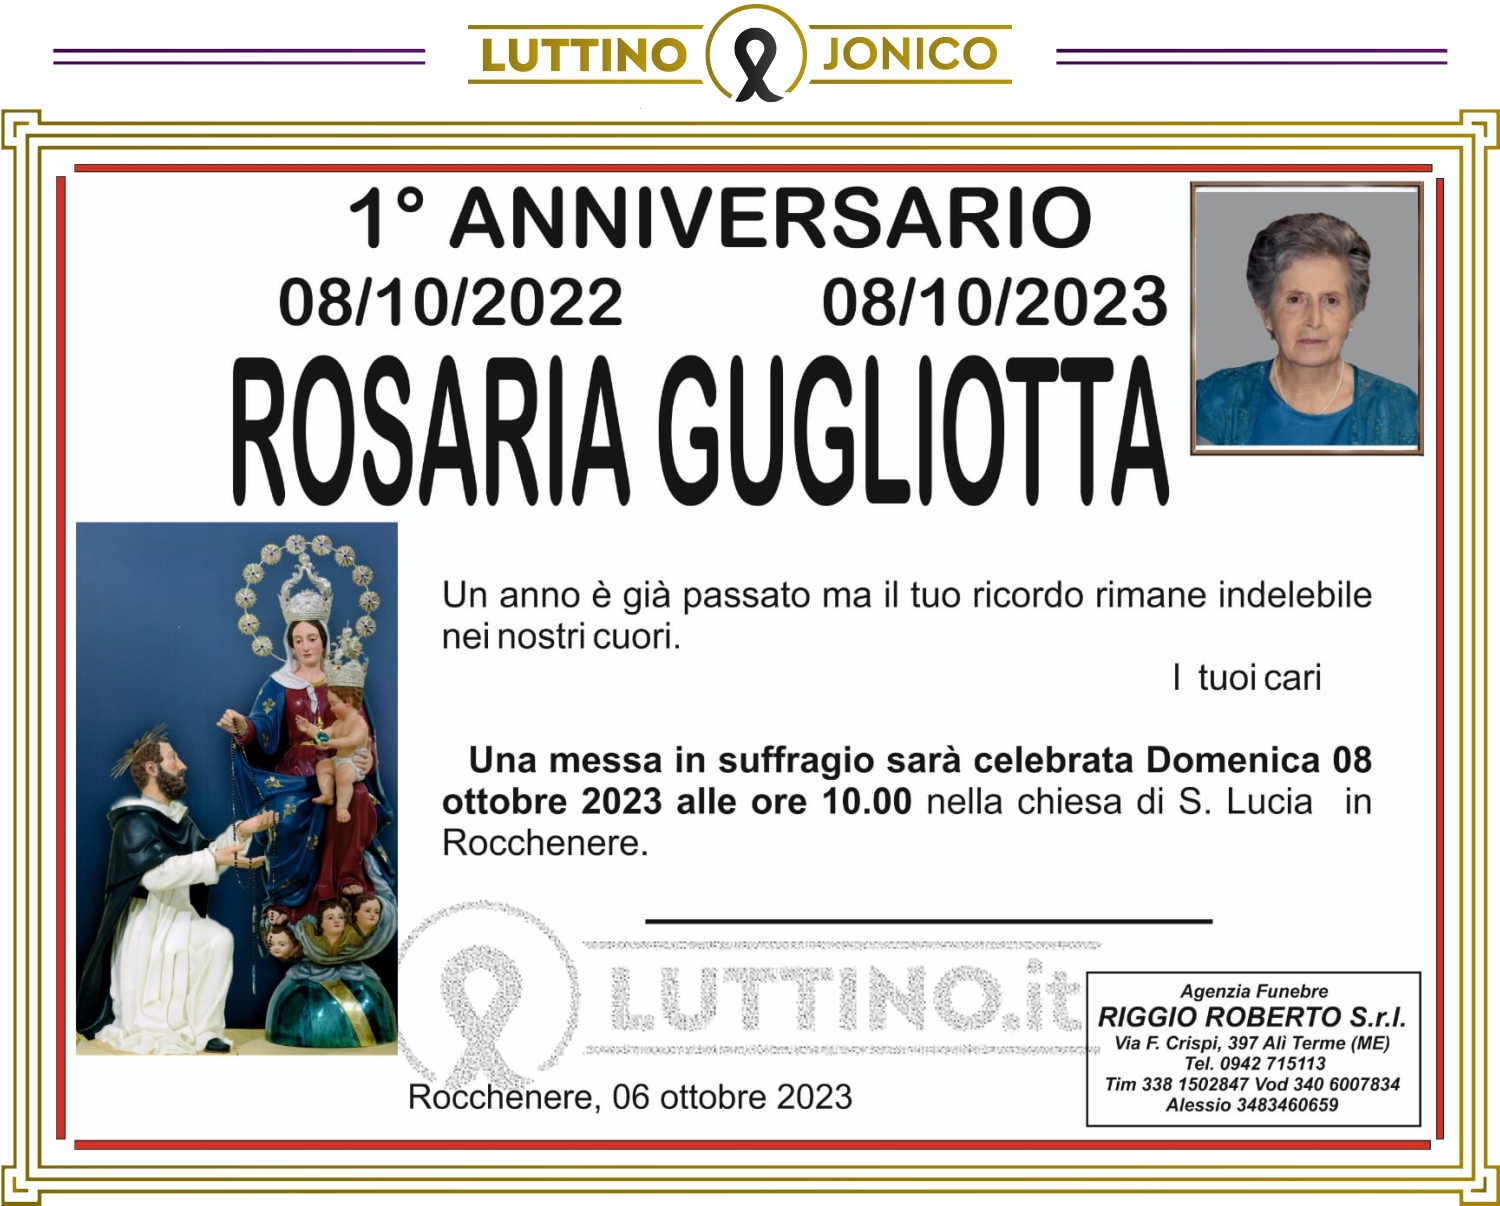 Rosaria Gugliotta